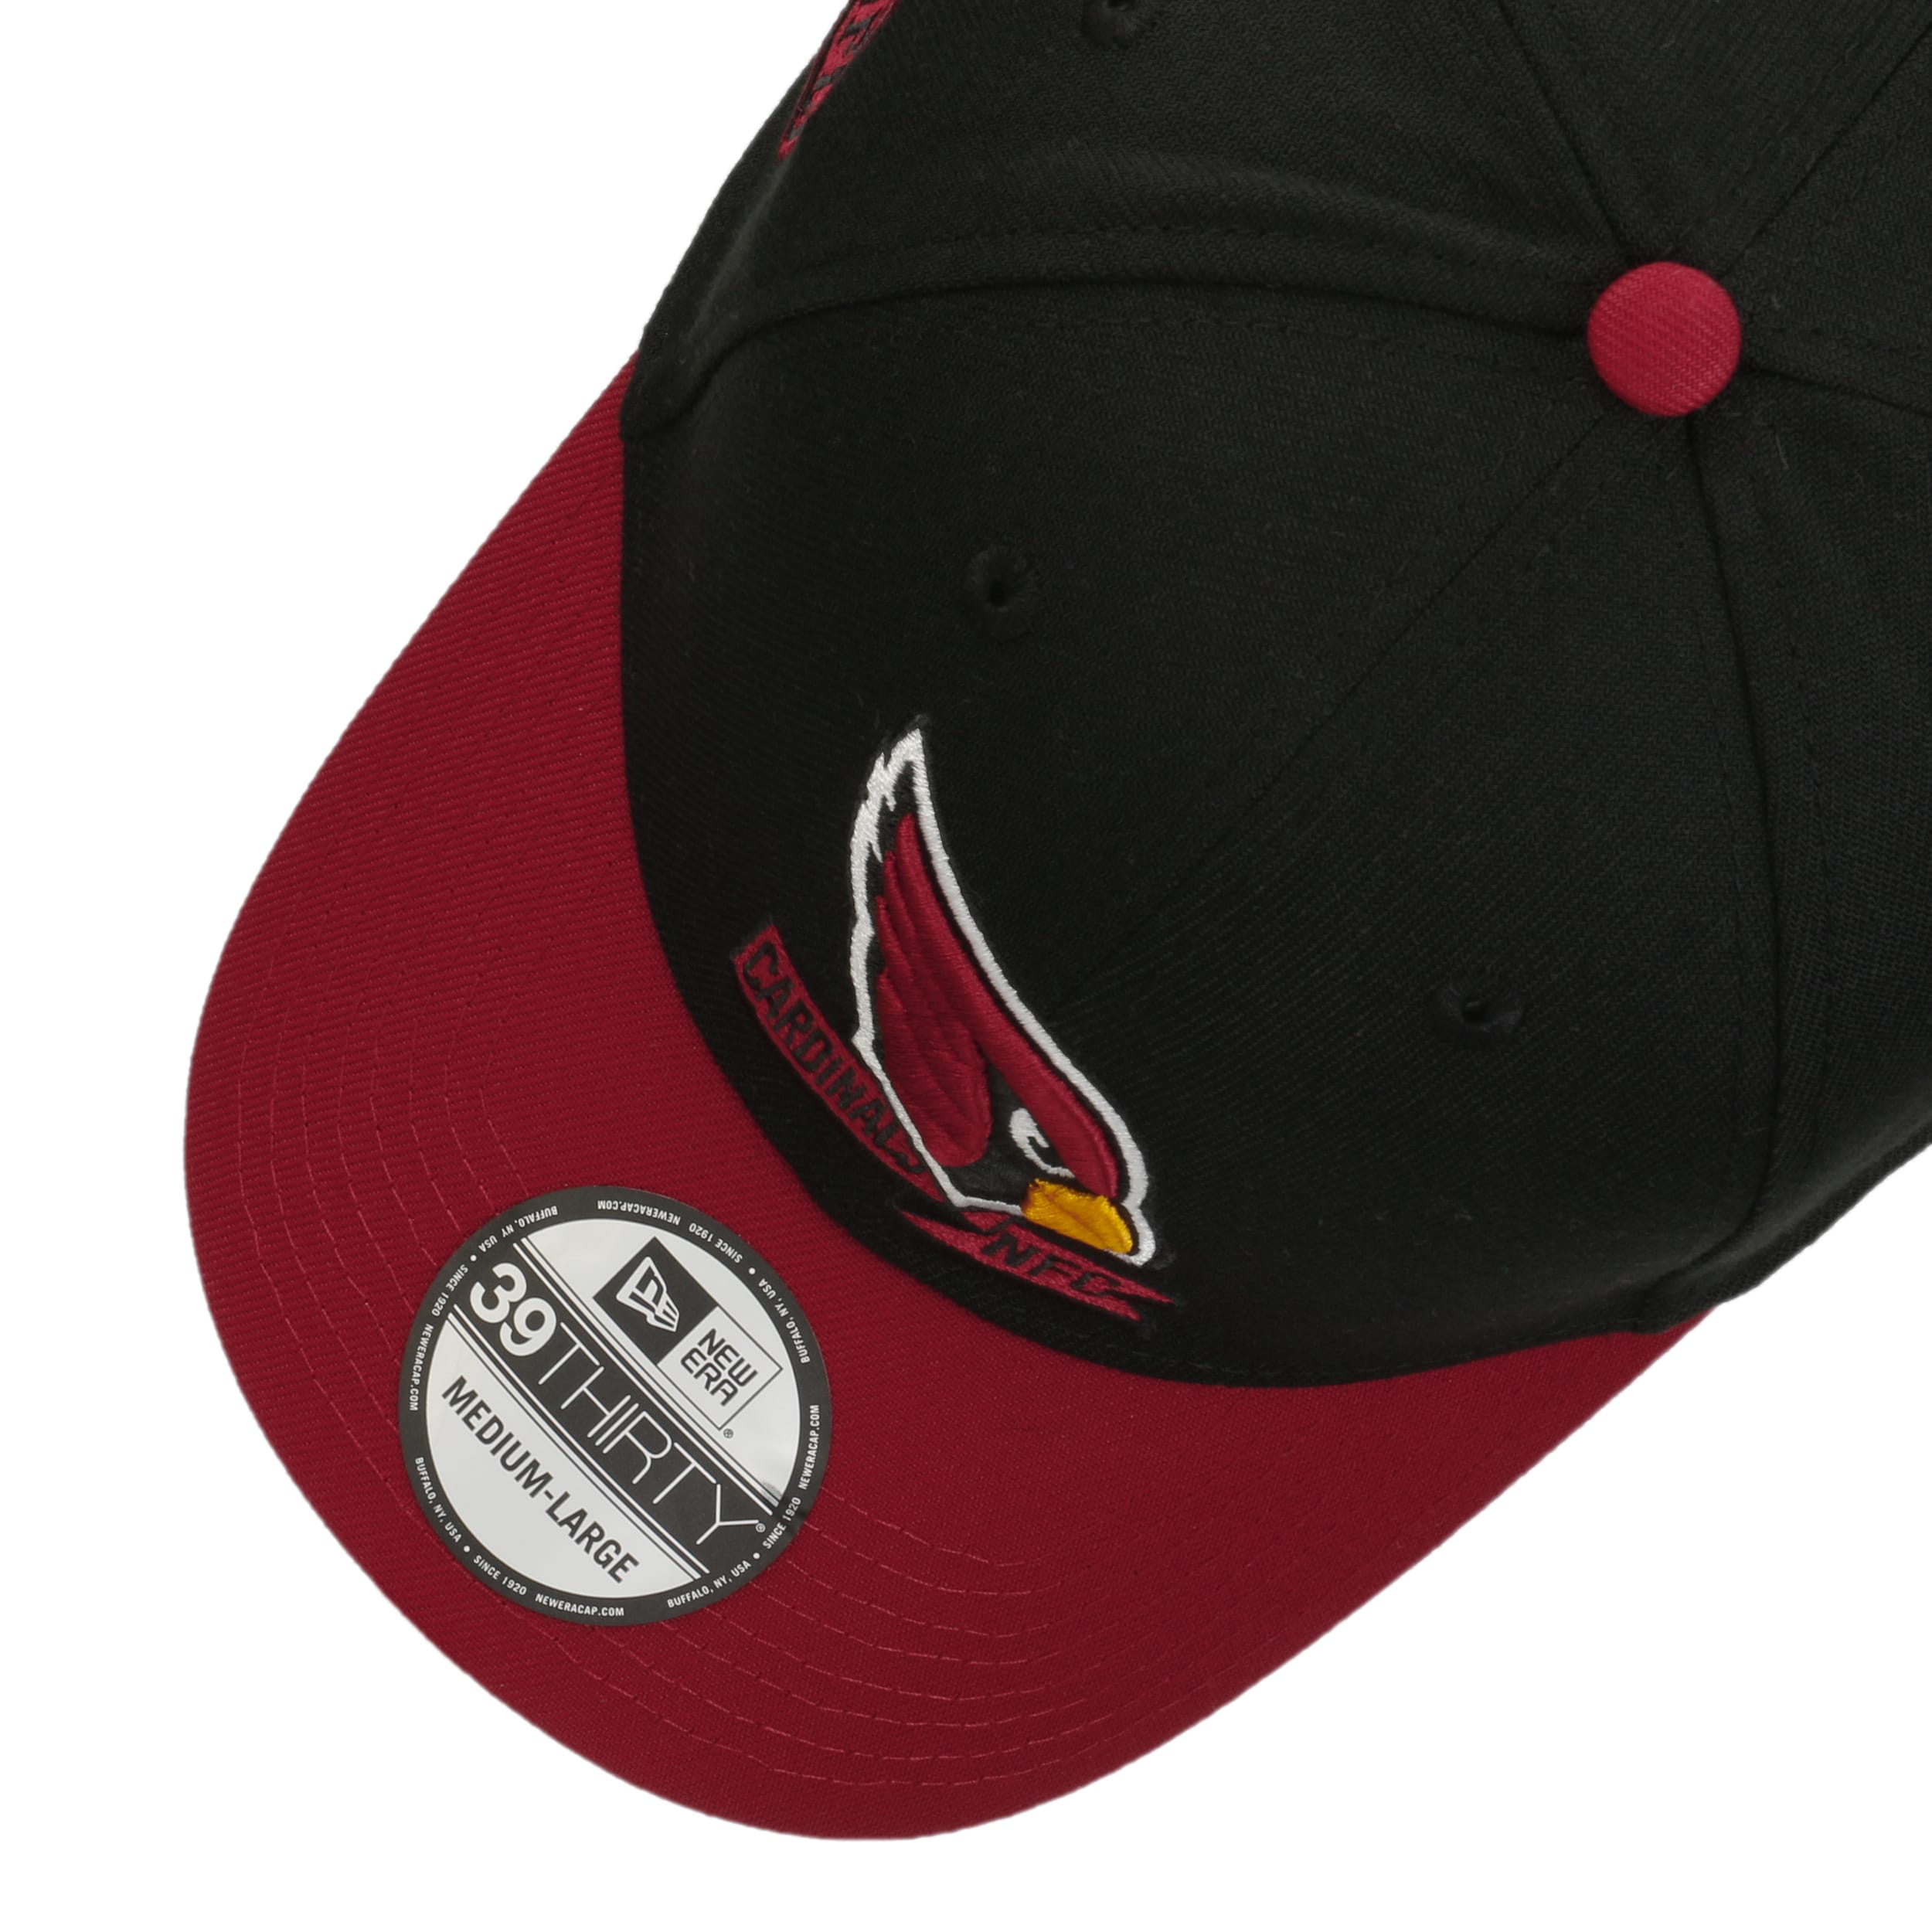 Arizona Cardinal NFL New Era 59FIFTY Fitted Hat Cap Cardinal hat